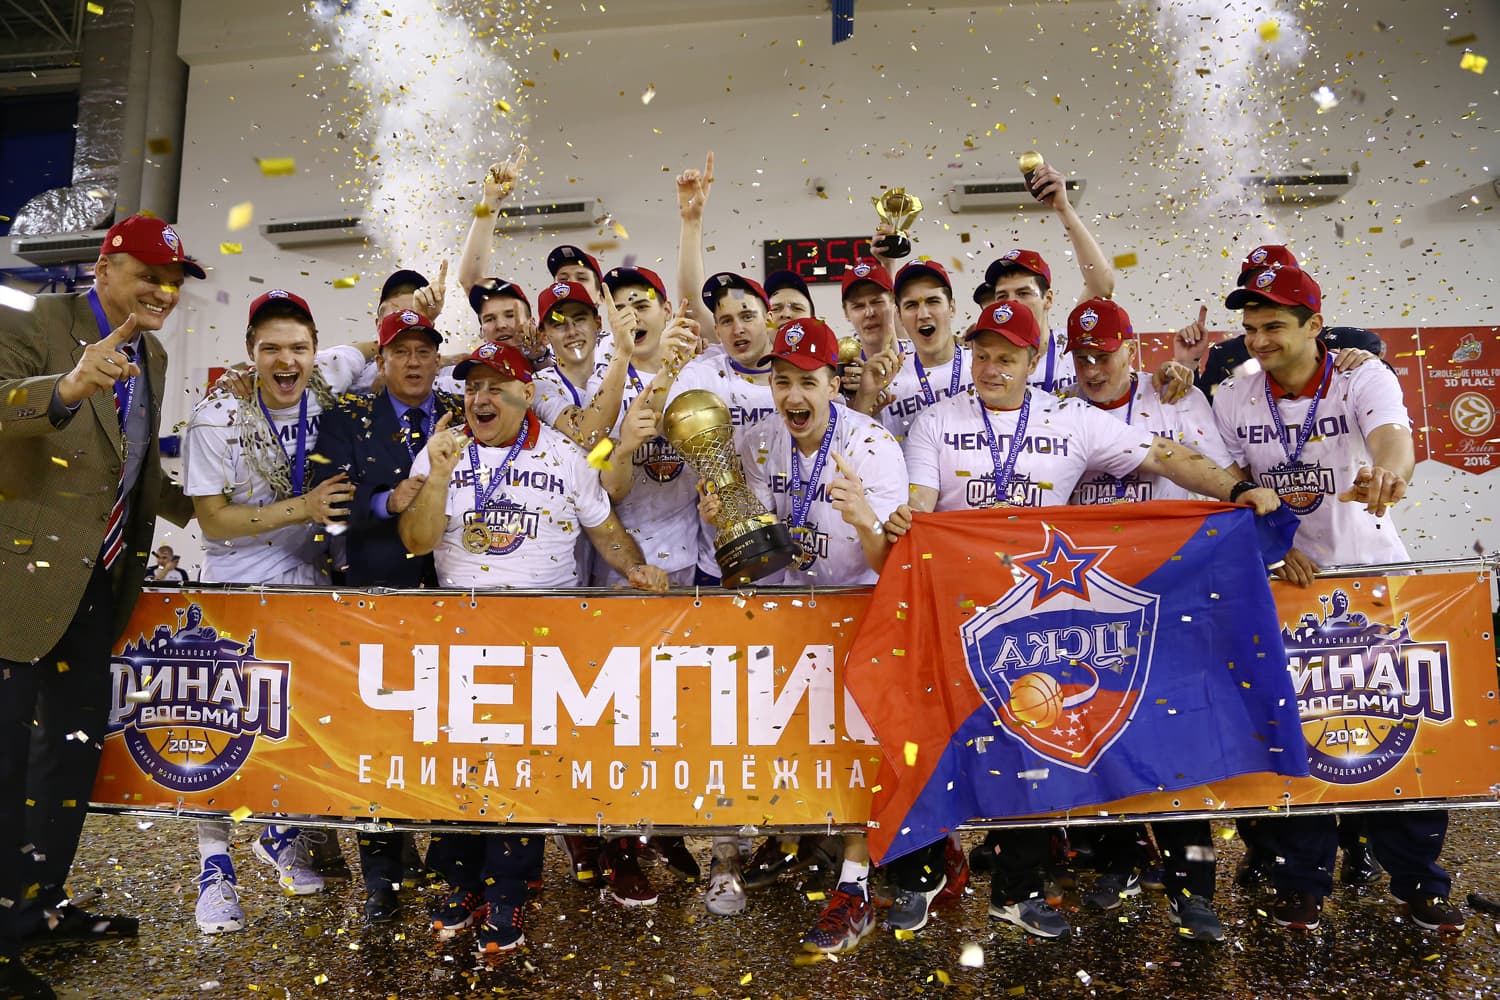 CSKA-2 Wins Youth League!